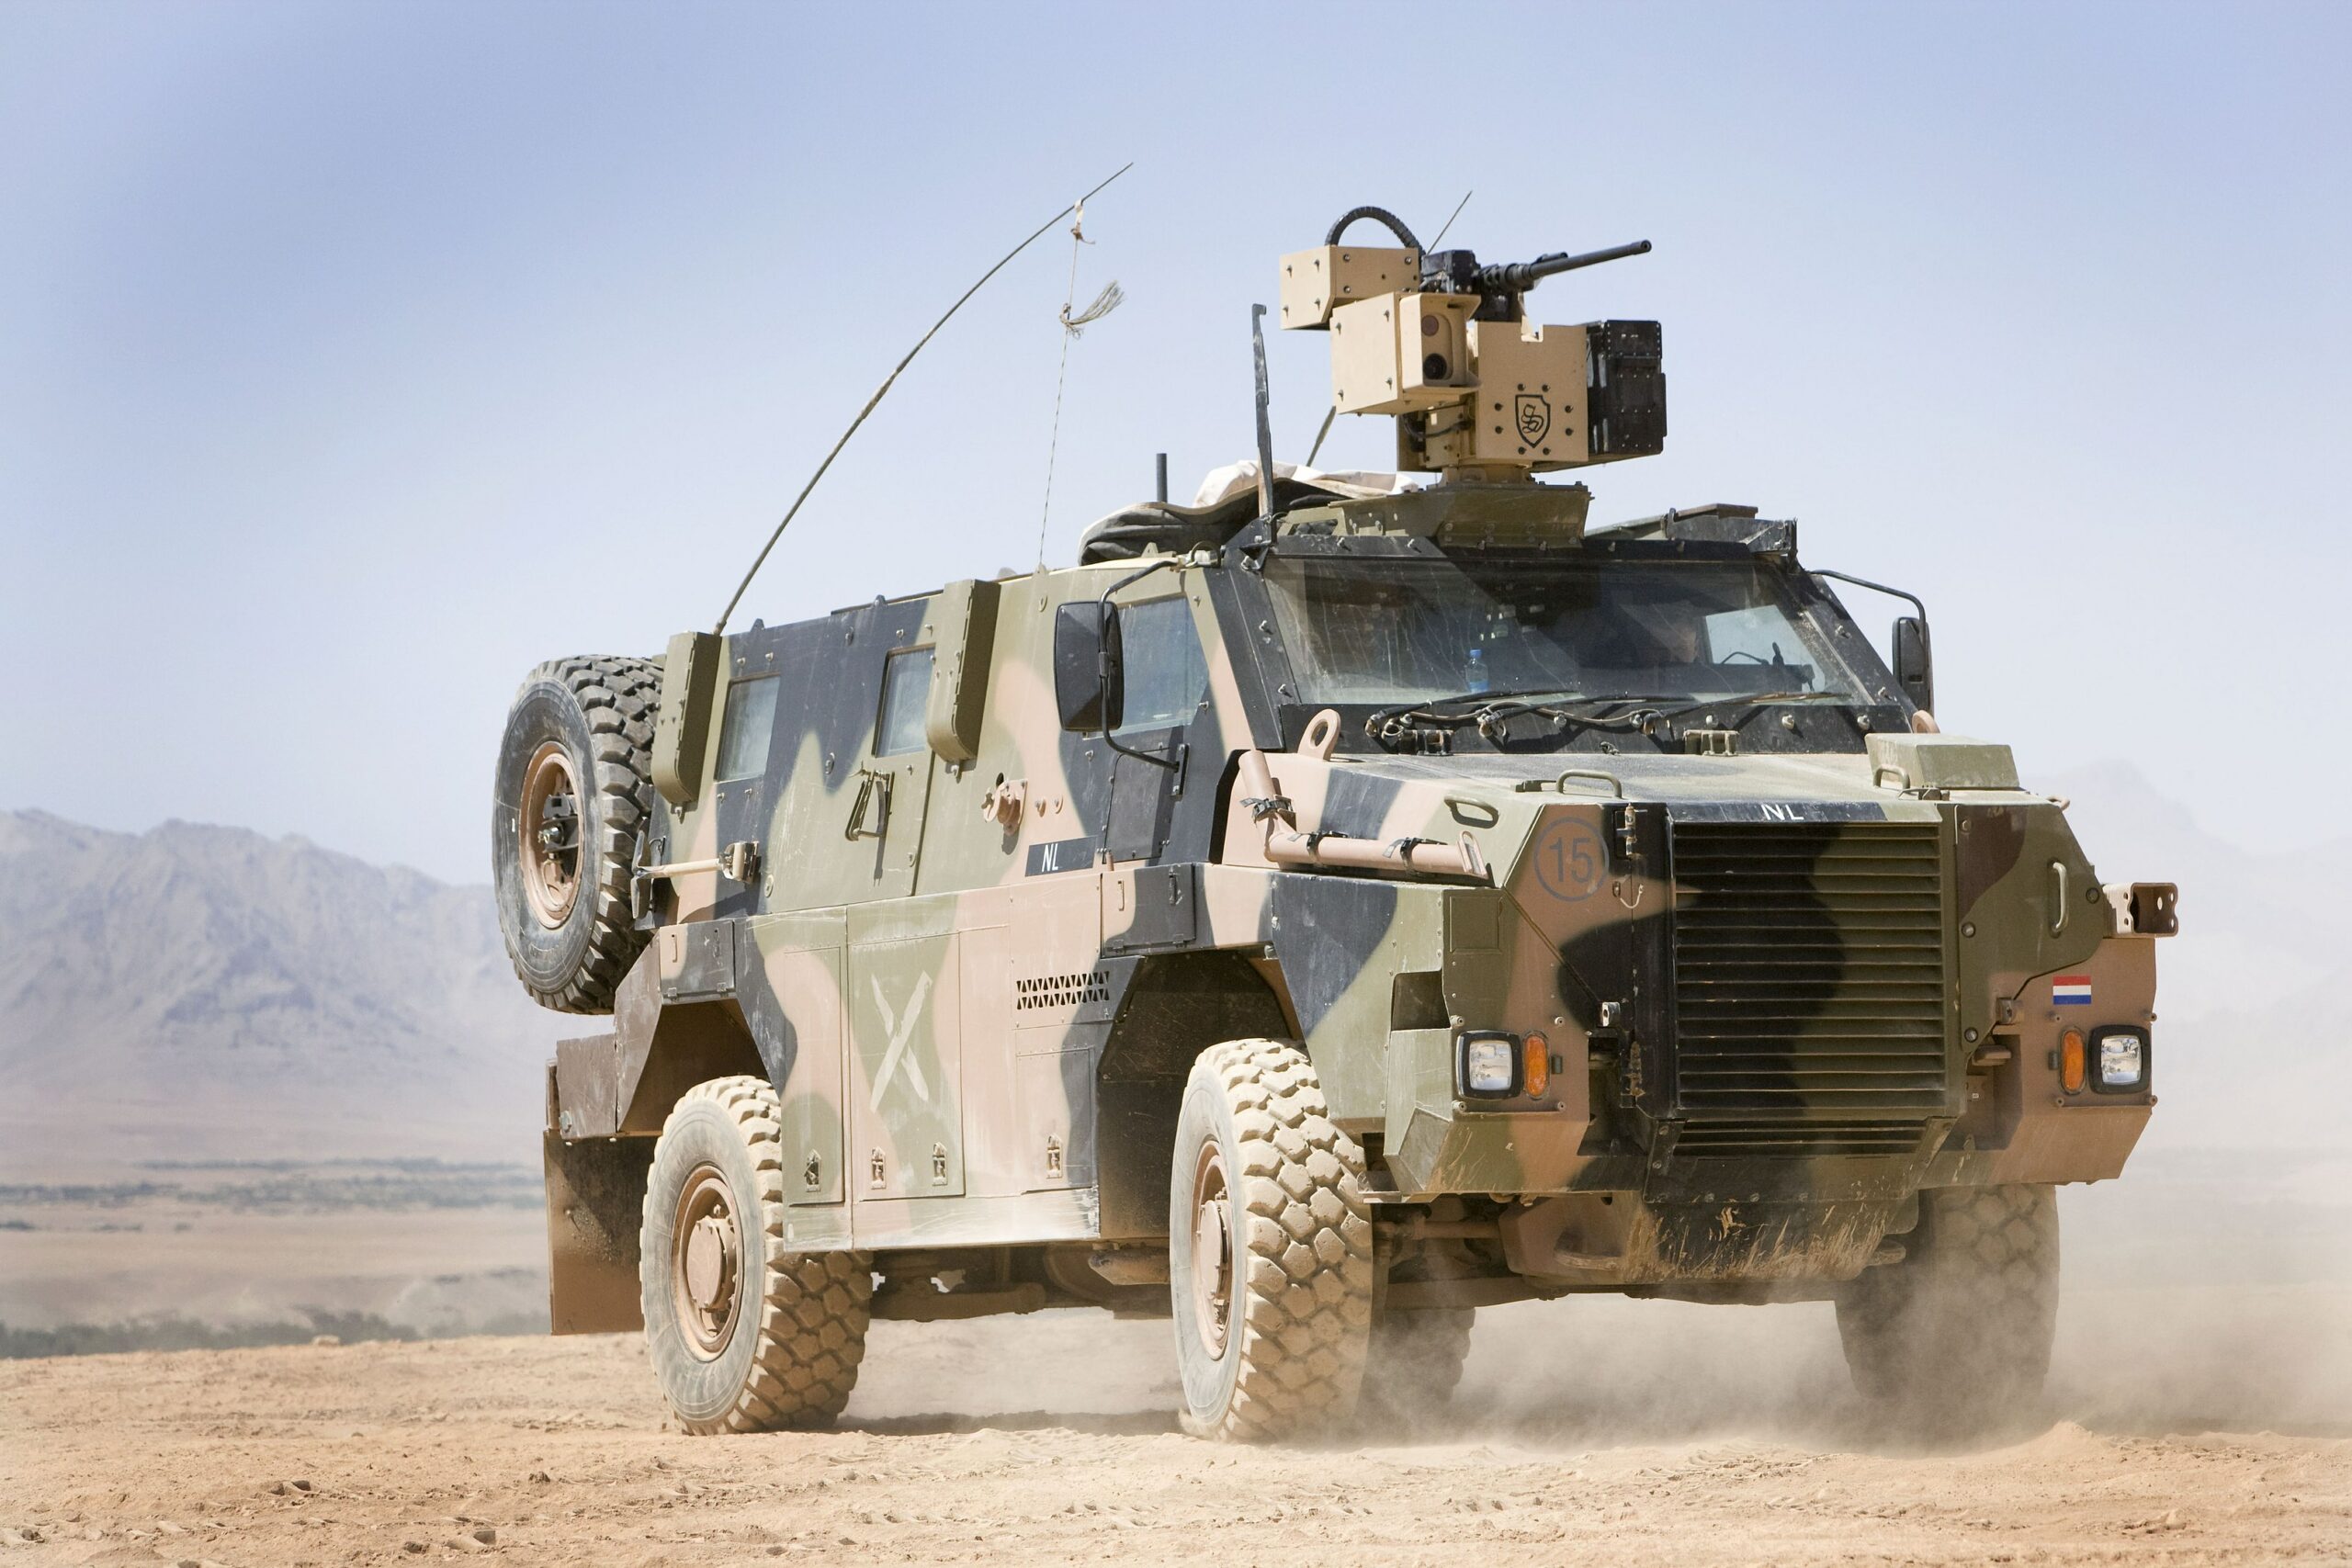 Bushmaster with remote turret